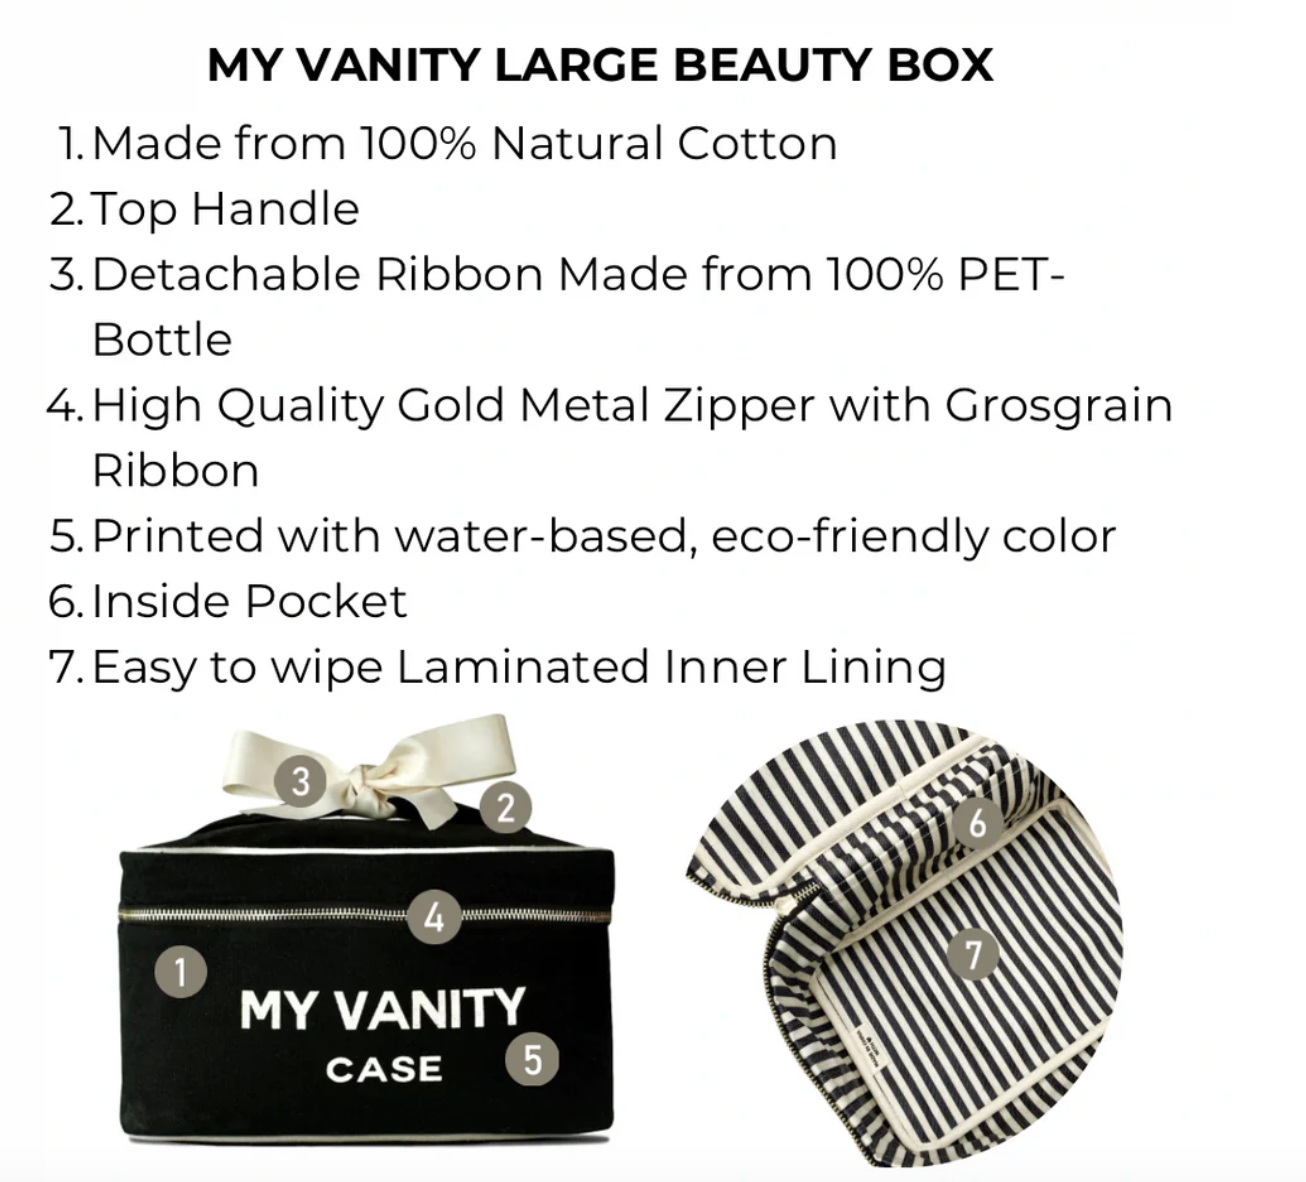 My Vanity Black Large Beauty Box